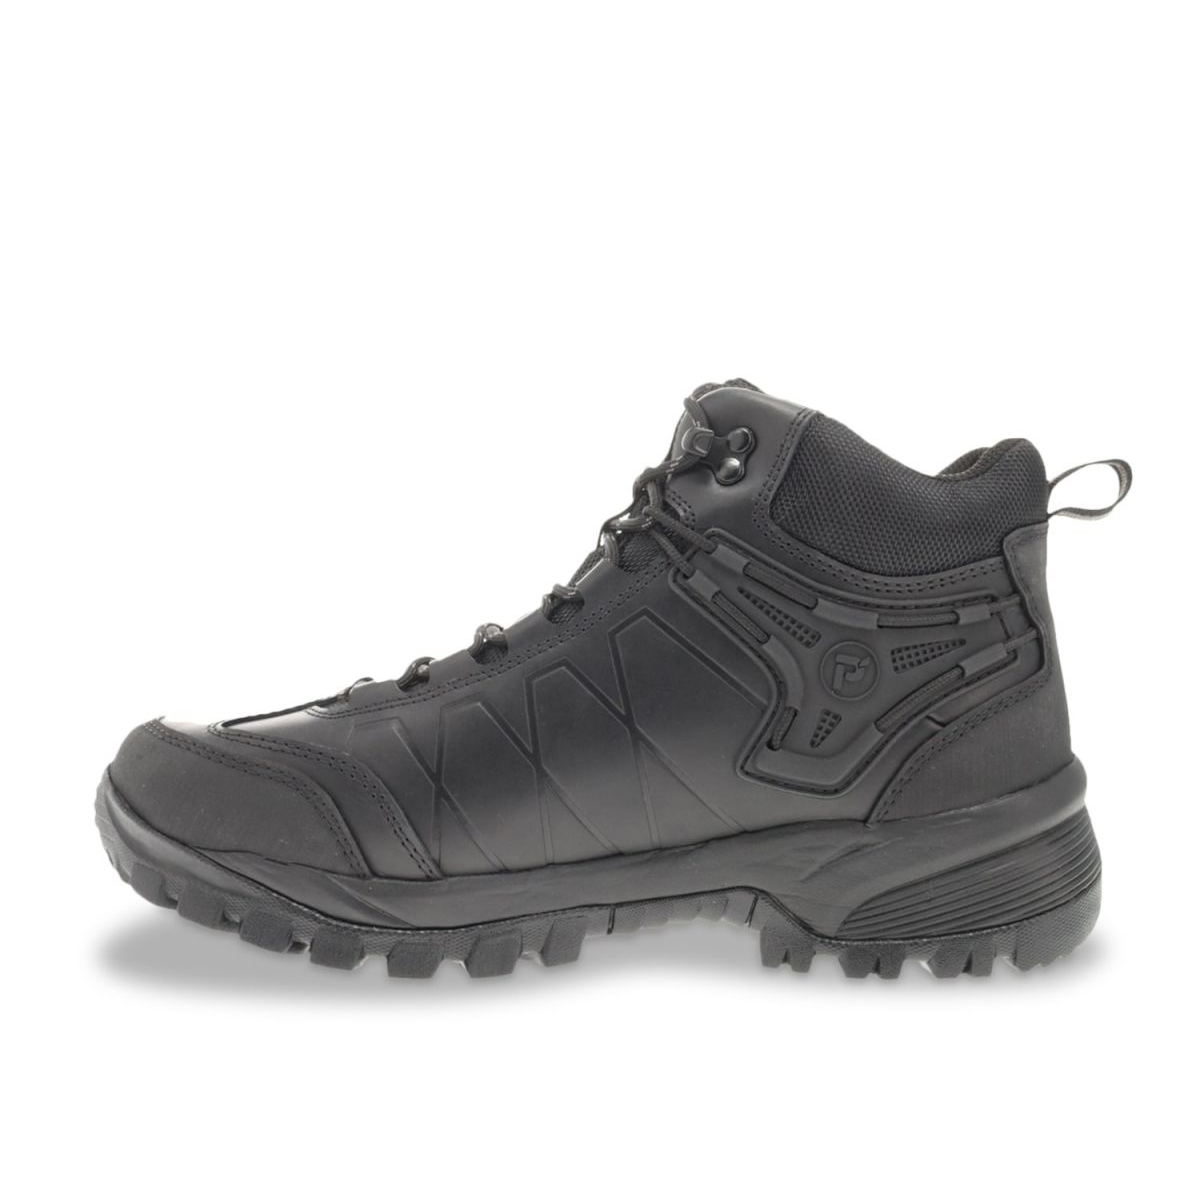 Propet Men's Ridge Walker Force Hiking Boots Black - MBA052LBLK BLACK - BLACK, 8 Wide